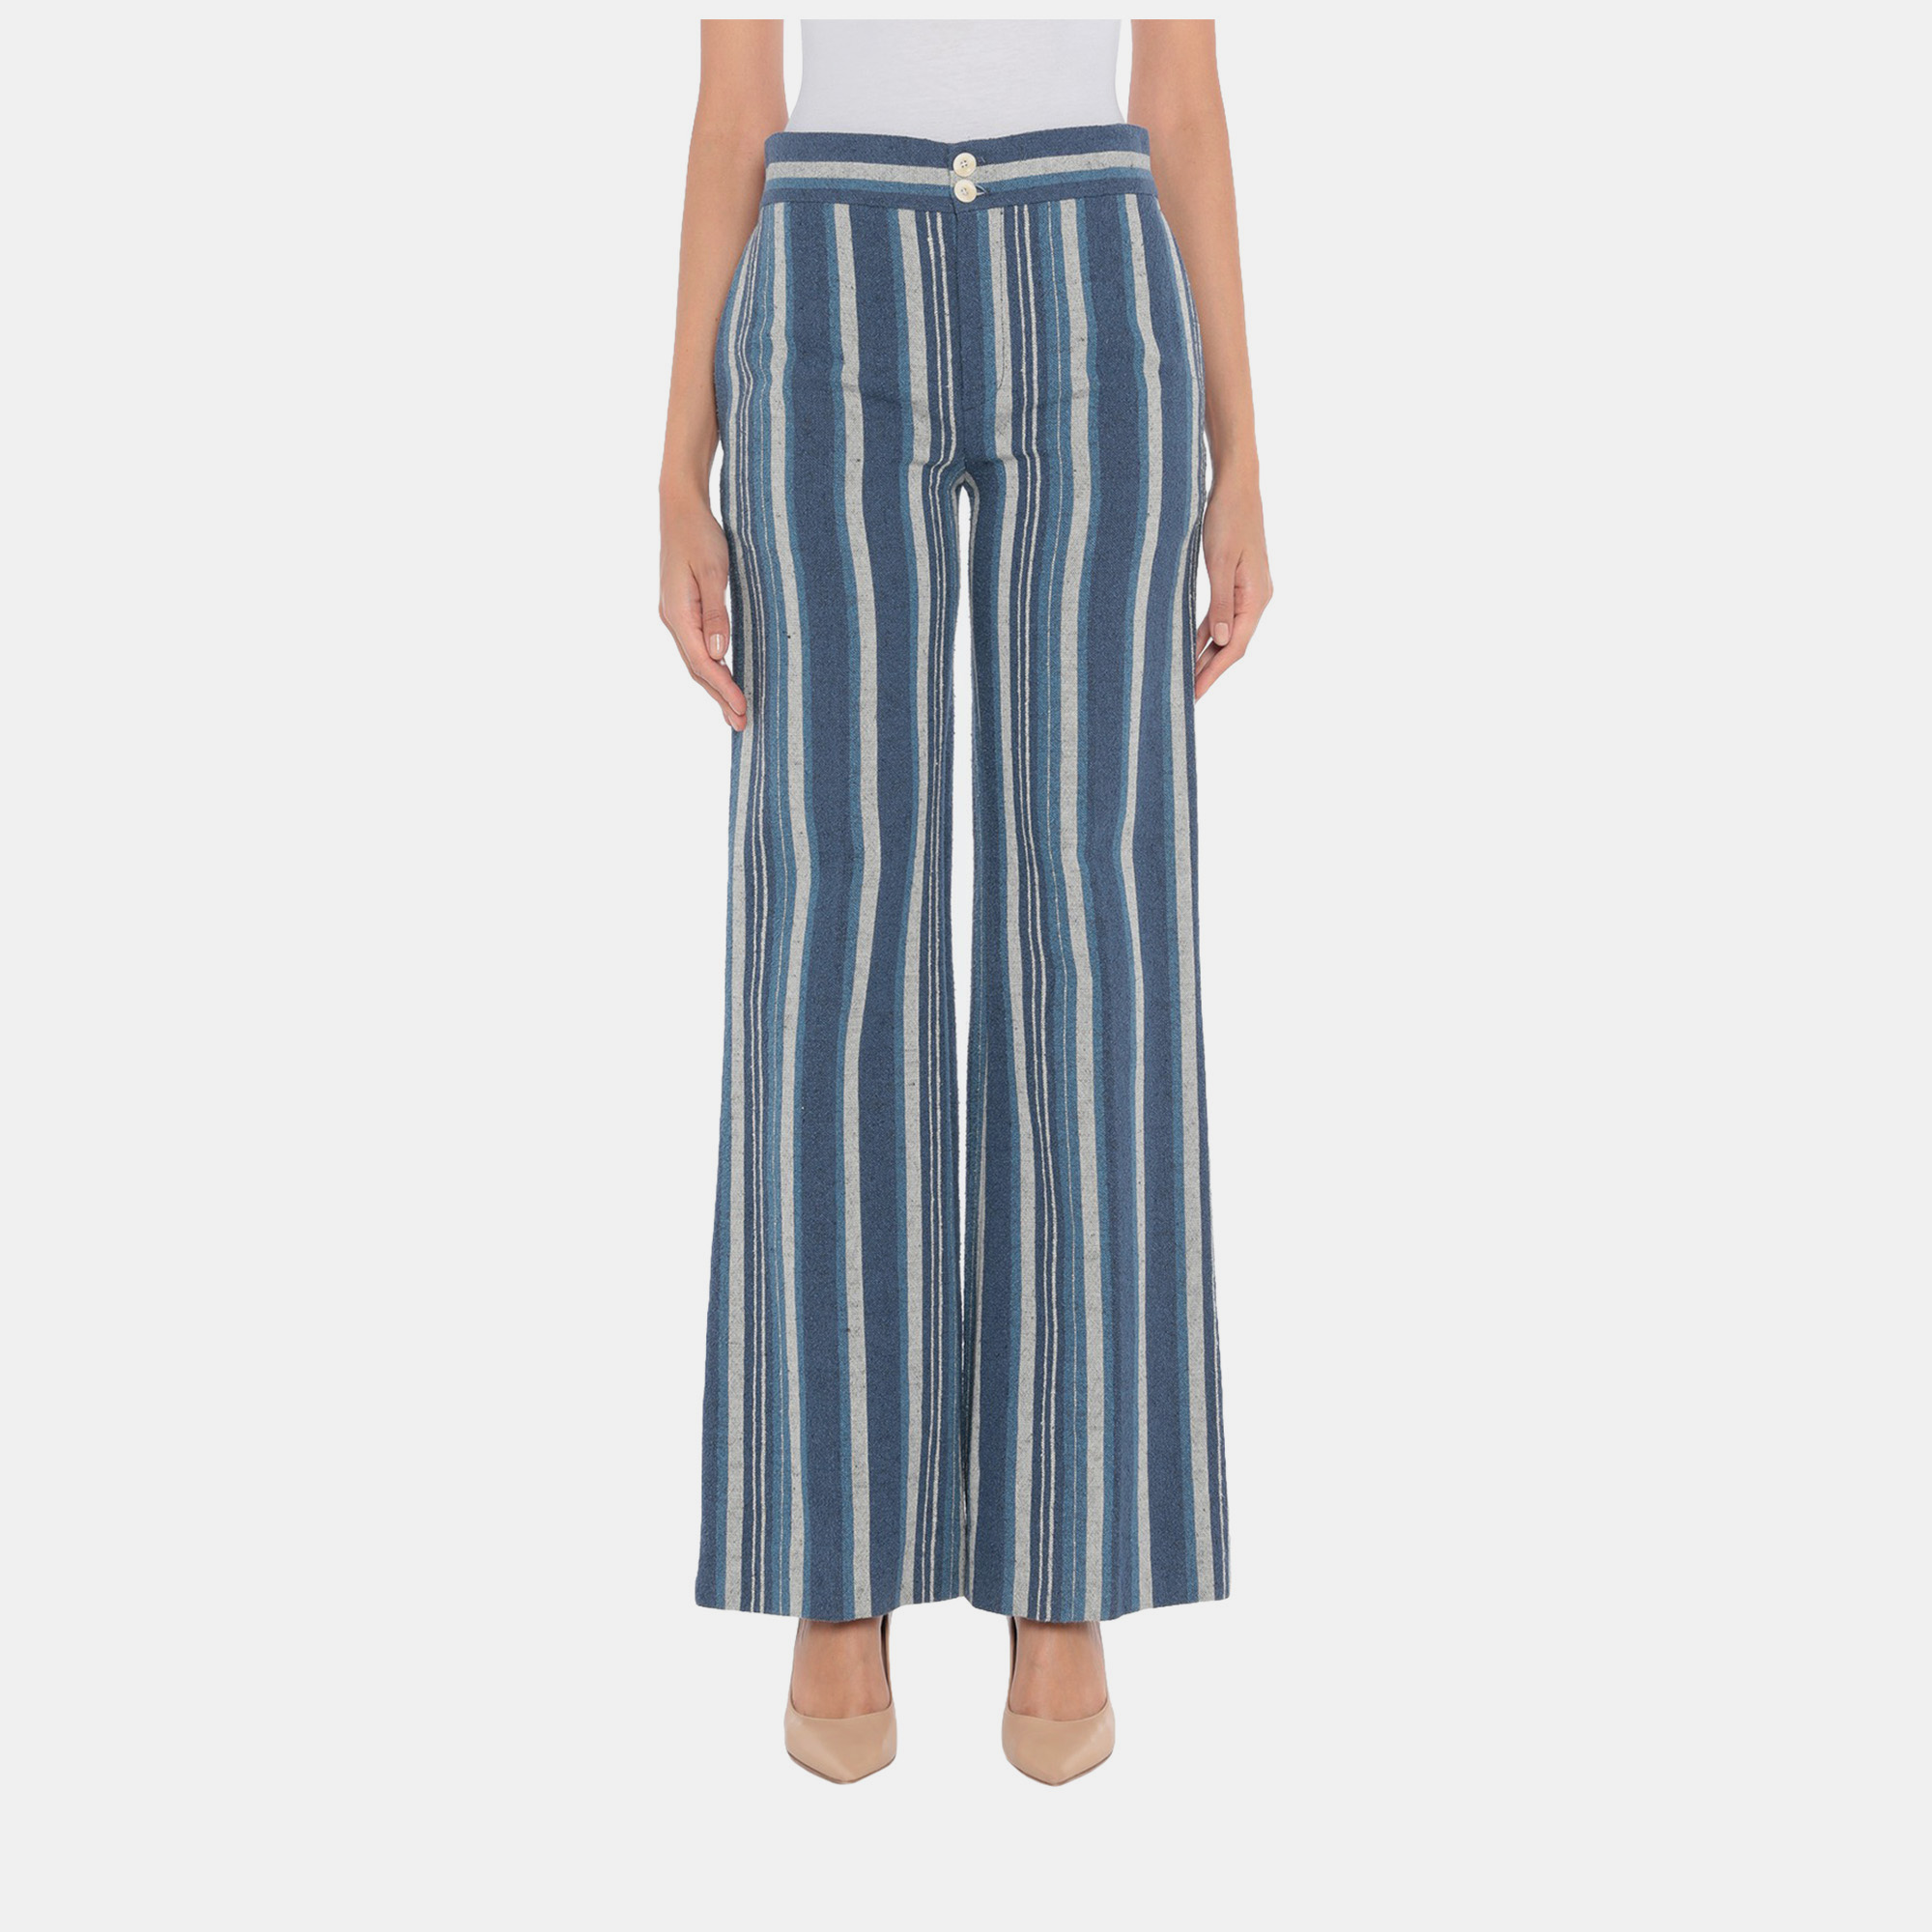 Chloe blue/beige striped cotton pants size 34